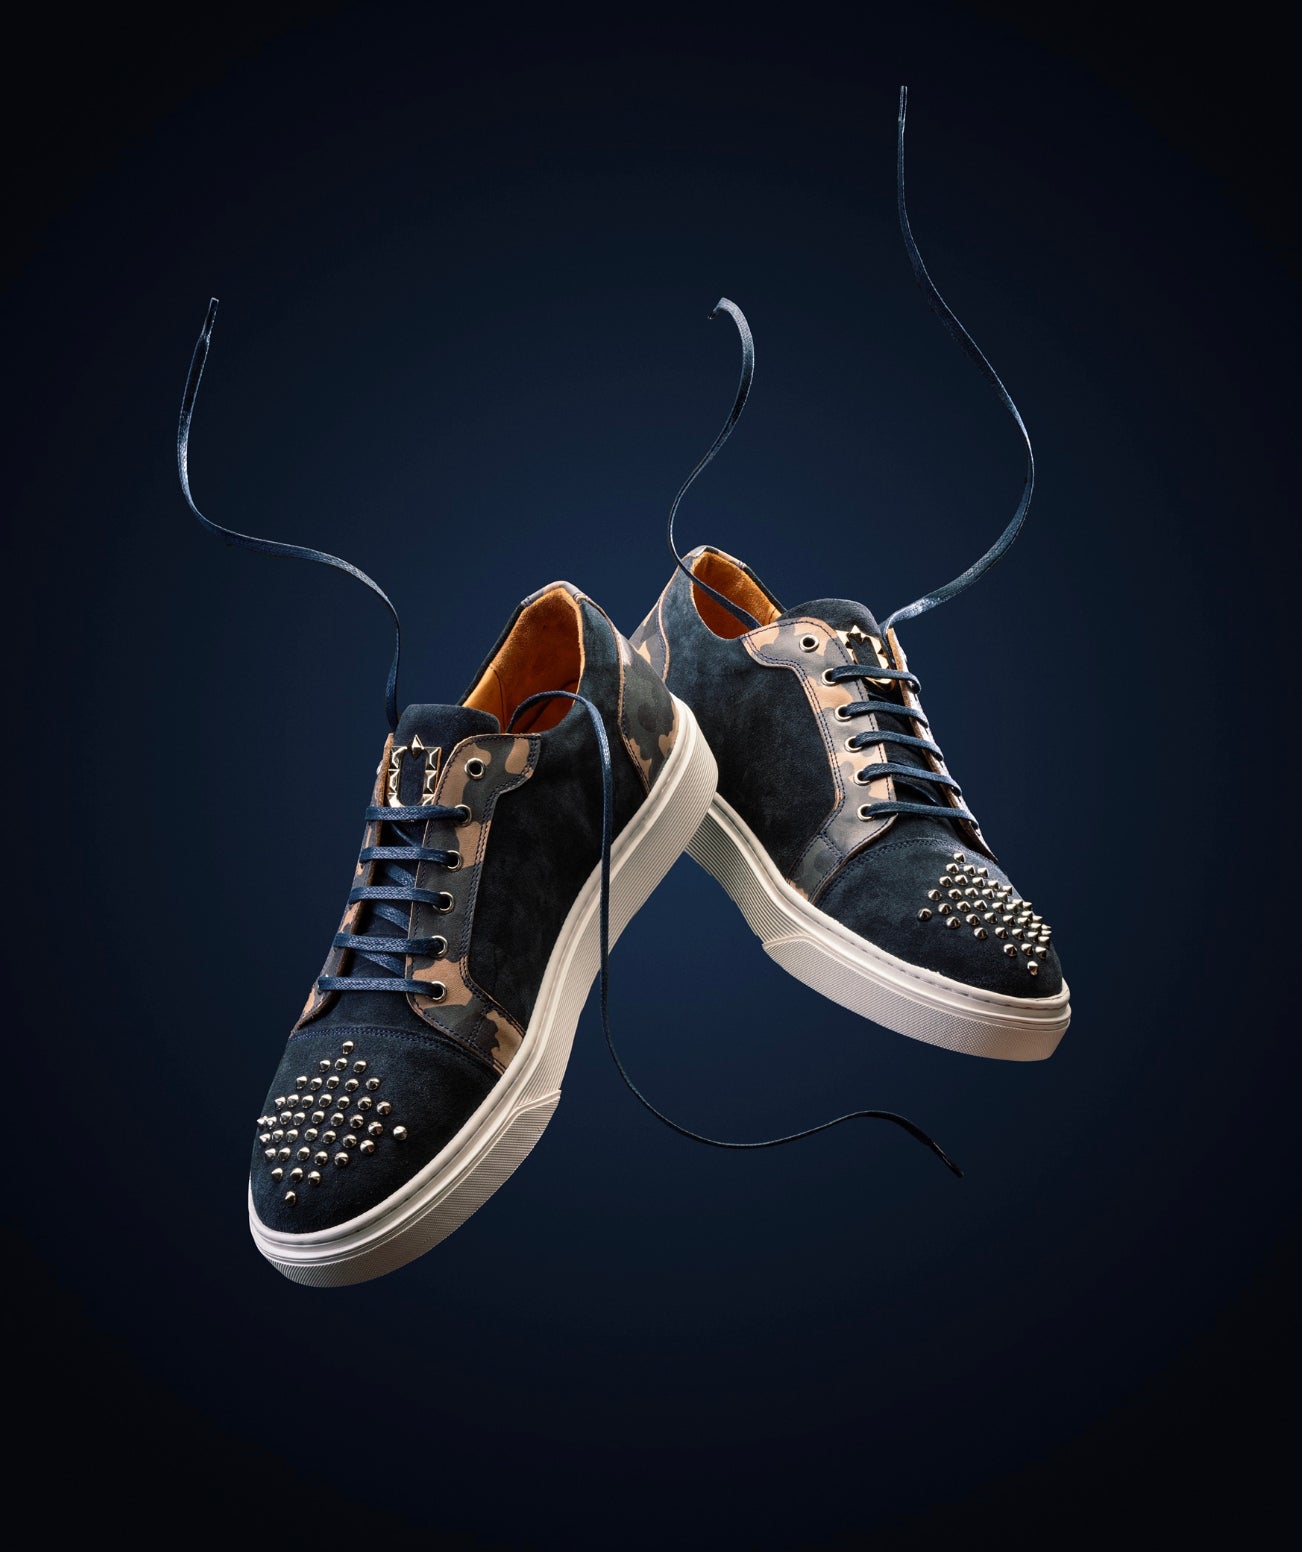 The Camo Stud Sneakers - Sneaker by Urbbana